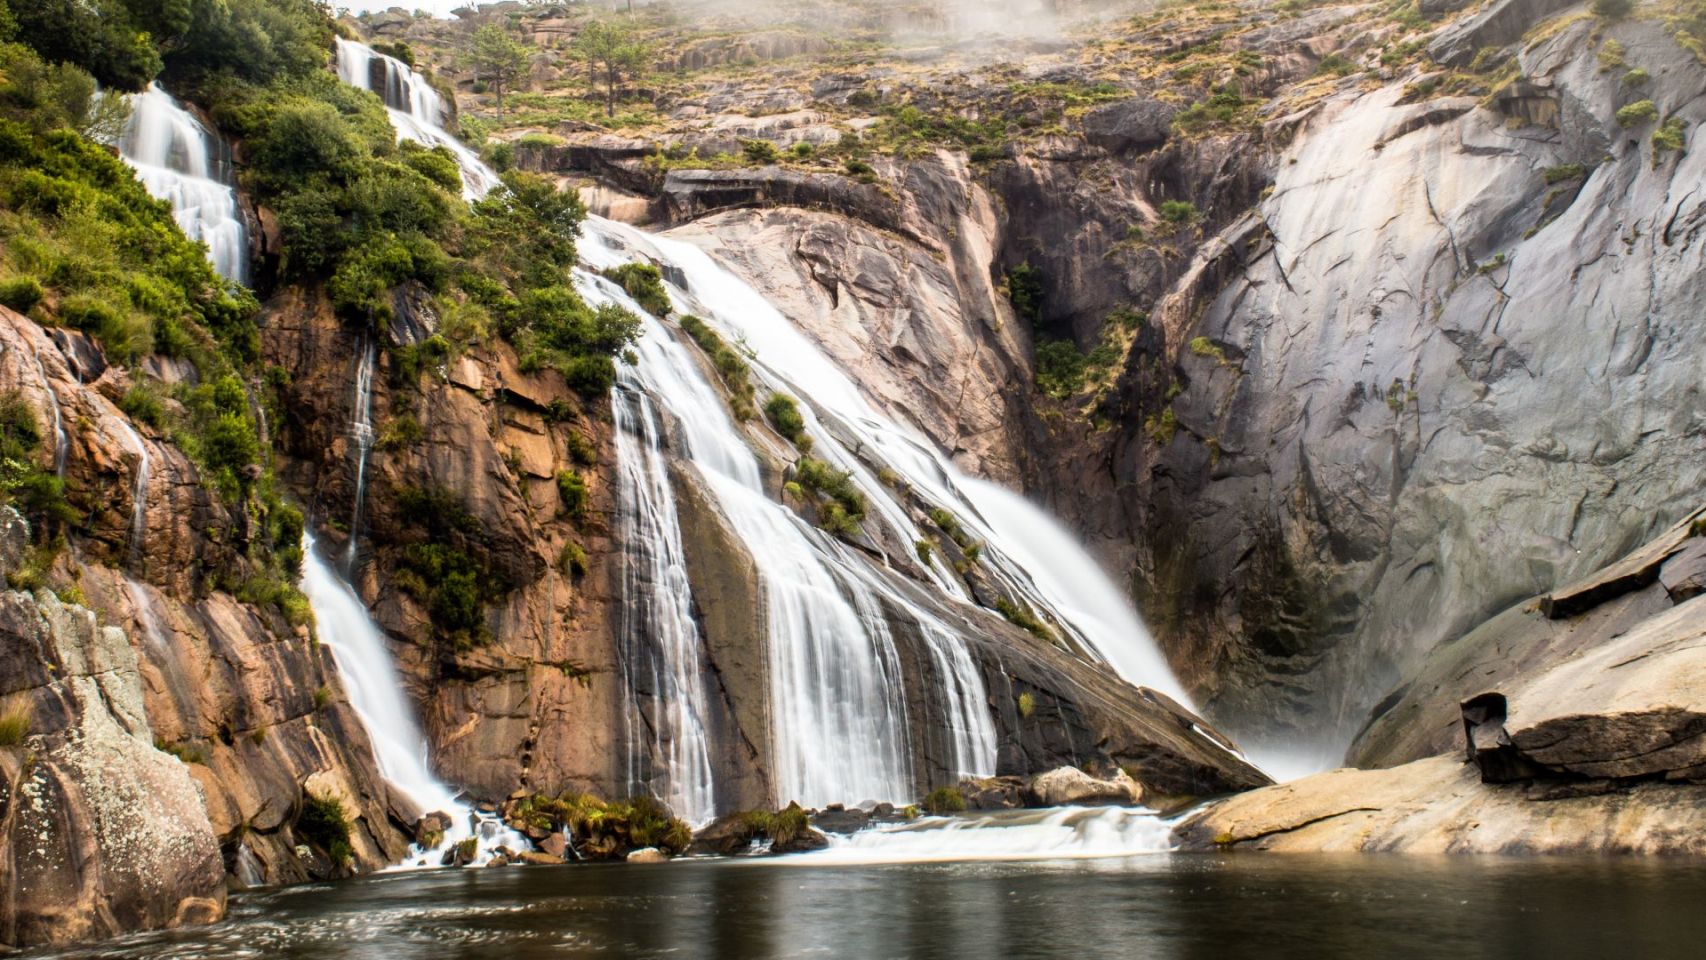 La cascada de Ézaro, el único salto de agua de toda Europa que